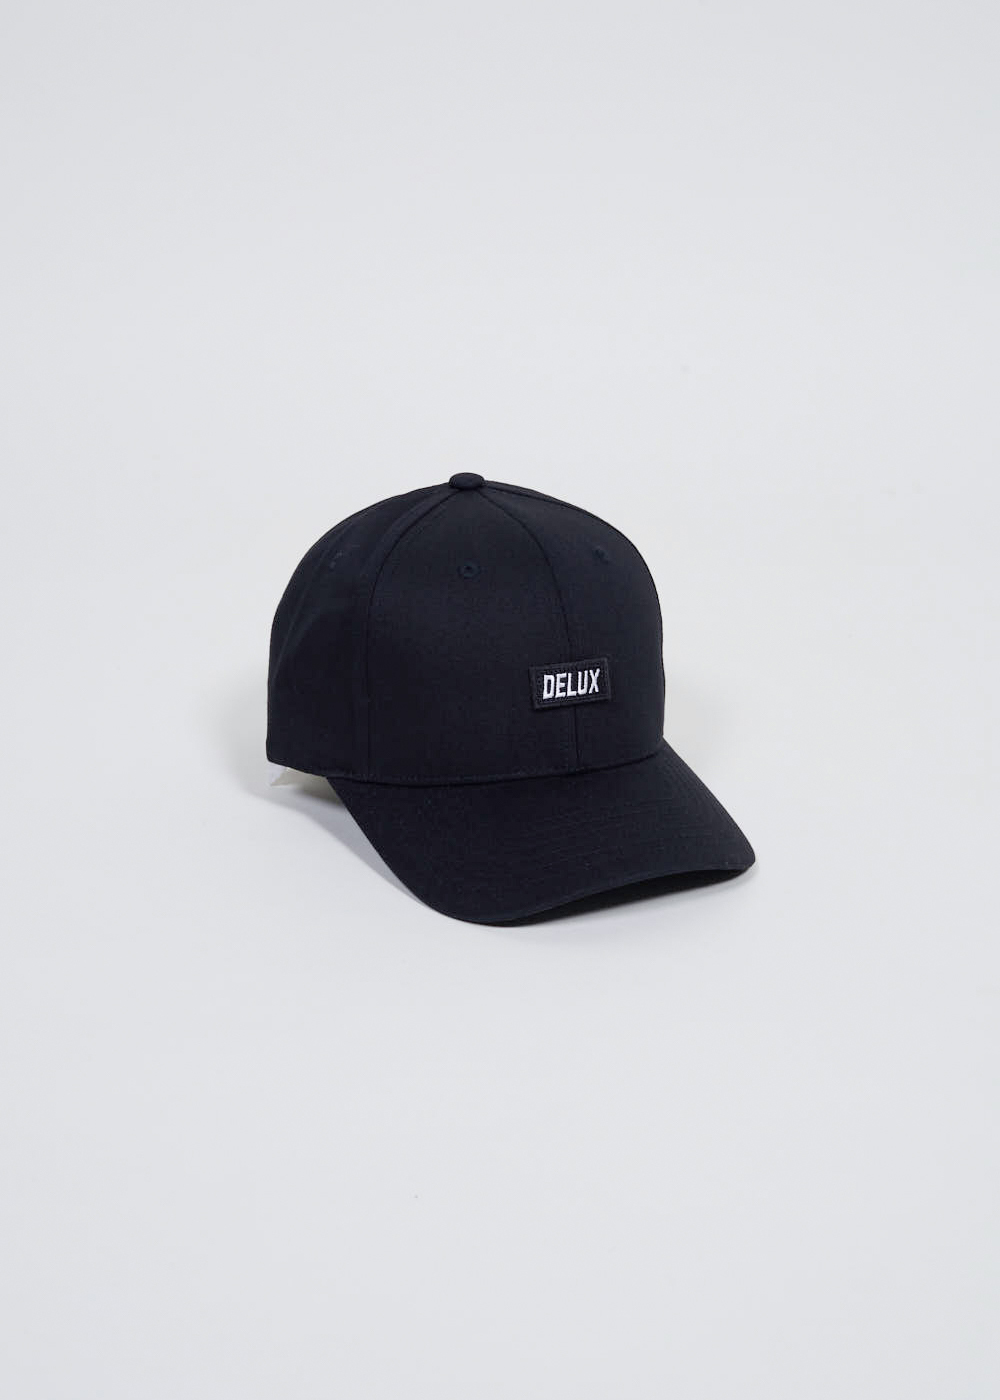 DELUX BLACK B CAP - BLACK ON BLACK